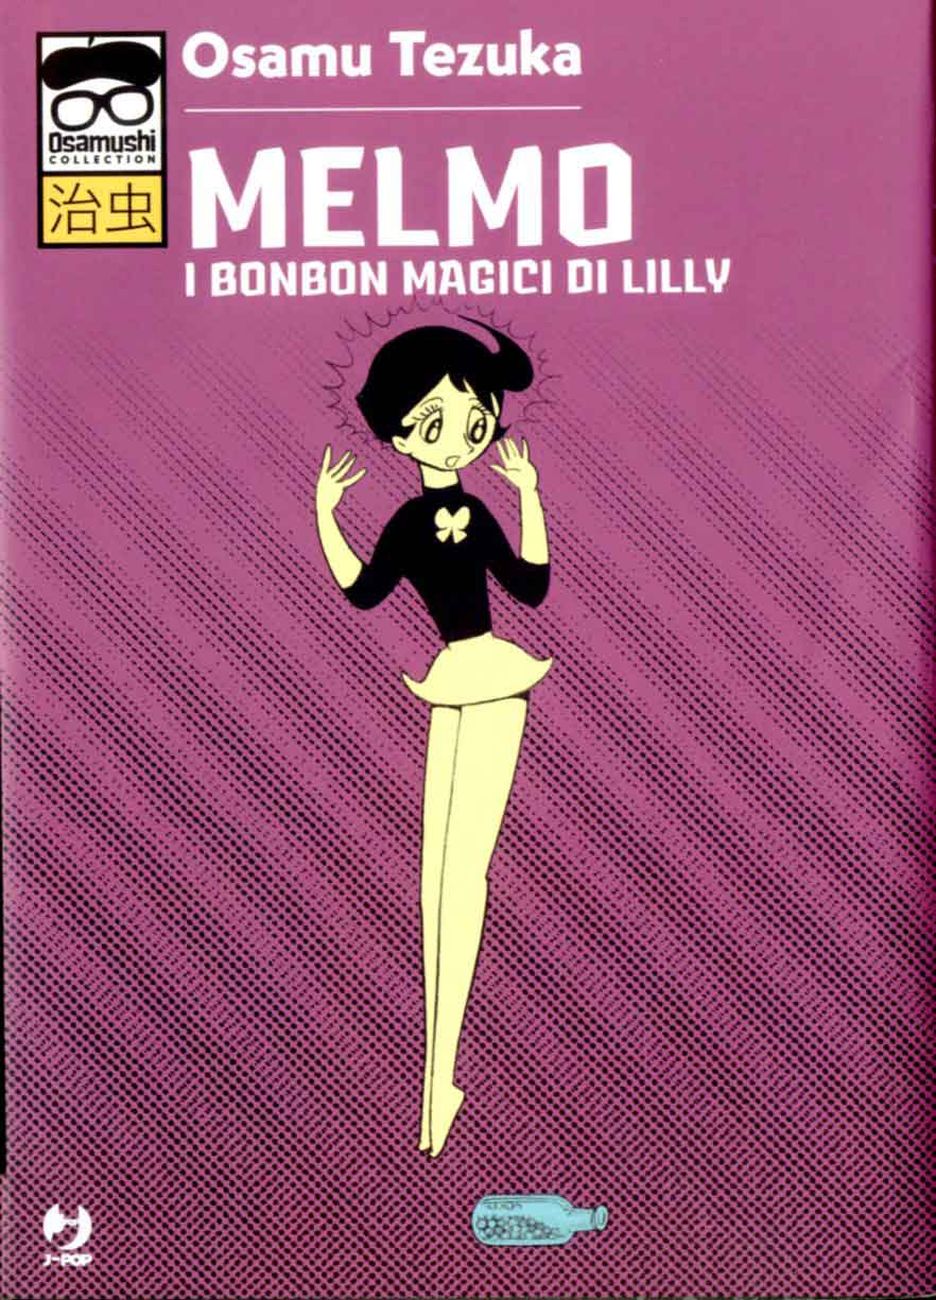 Tezuka Osamu – Melmo. I bonbon magici di Lilly (J Pop, 2019). Cover